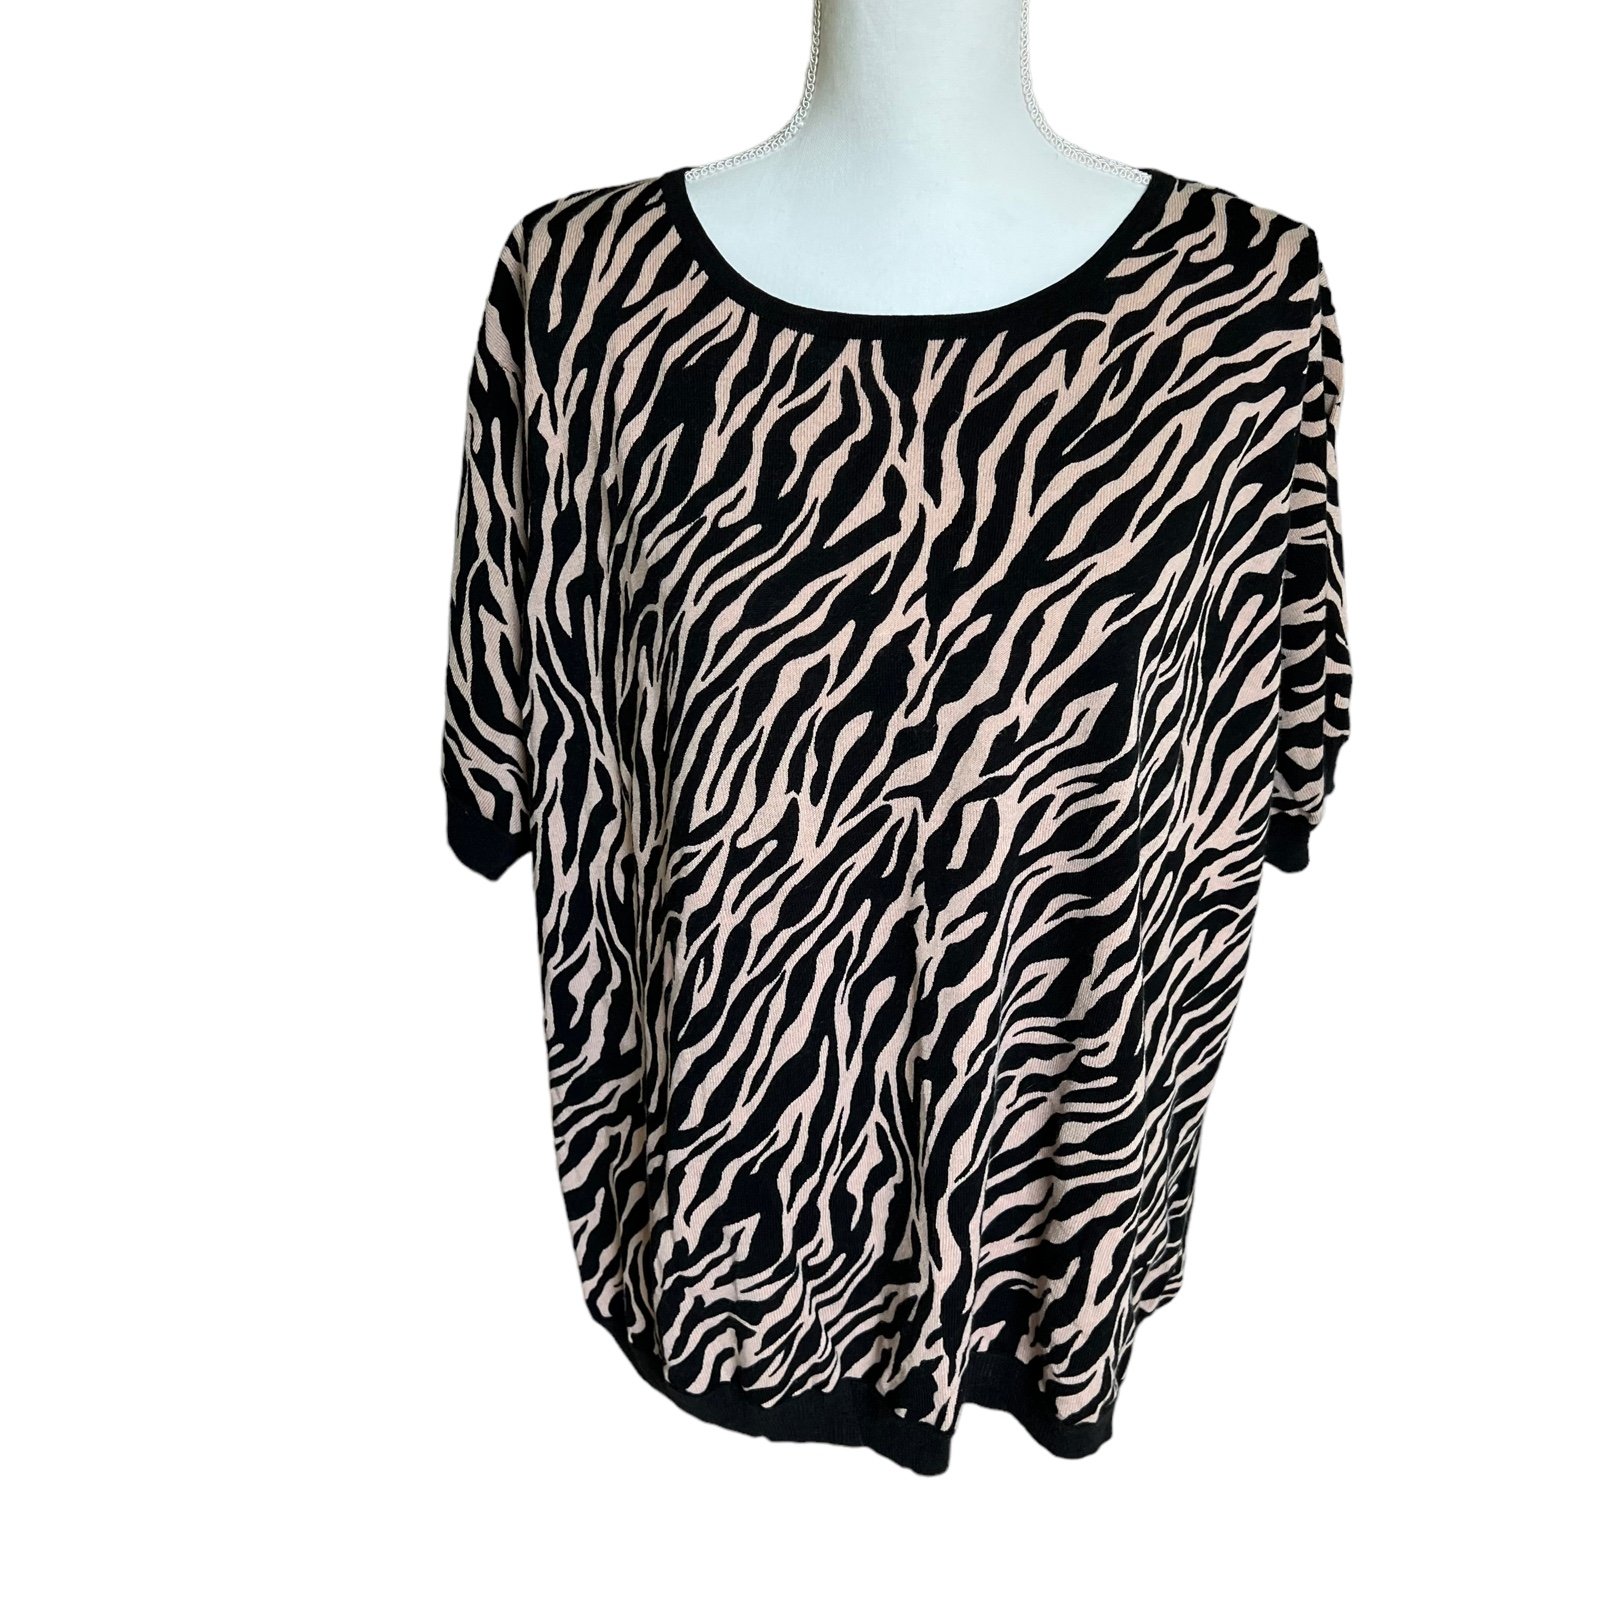 big discount Retro cotton rayon blend animal print short sleeve black tan women size 3x zebra oBM8ysgR4 hot sale